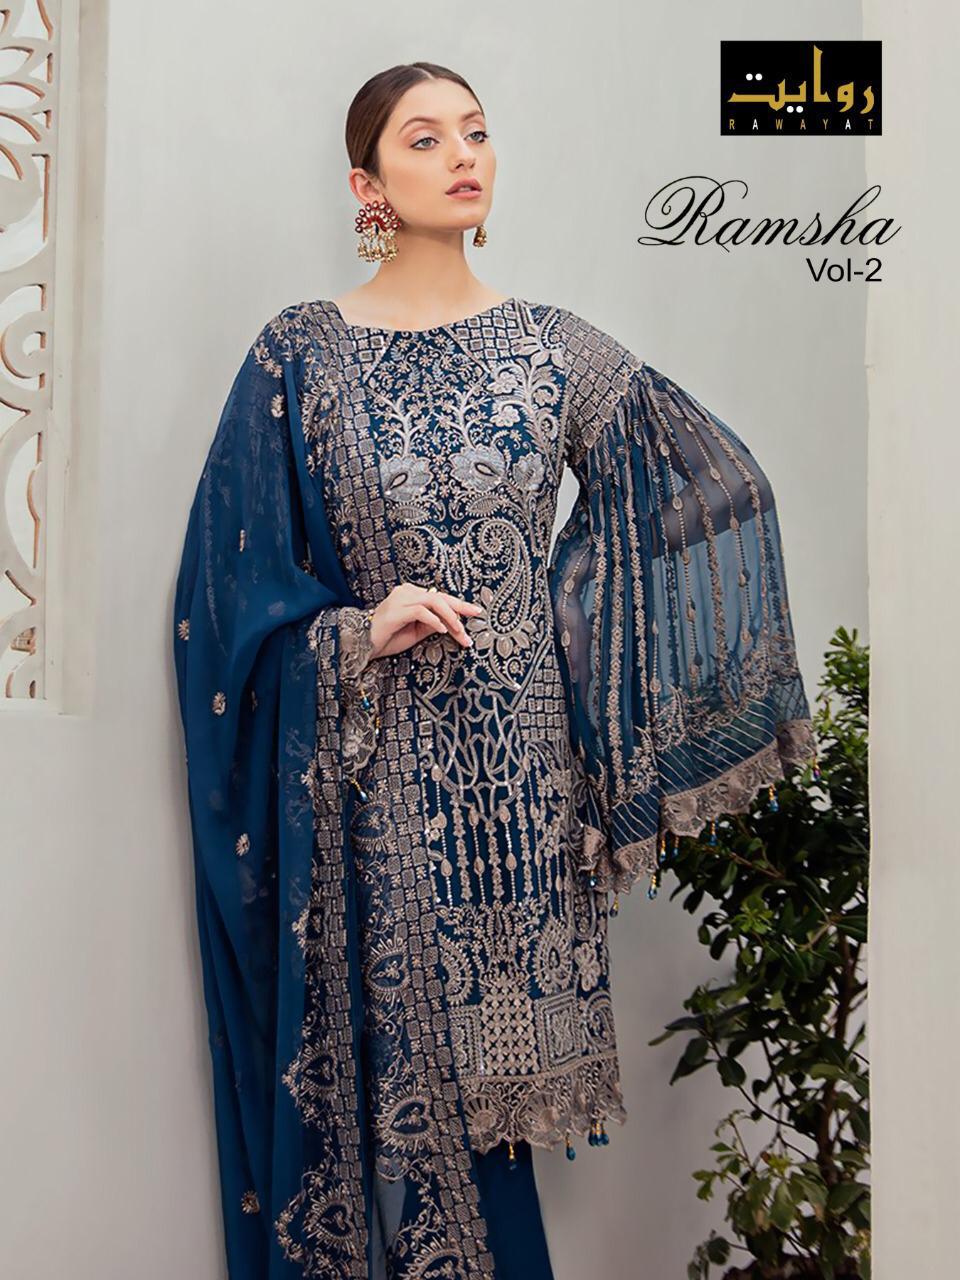 Rawayat Ramsha Vol 2 Chiffon - 2020 Designer Georgette Heavy Self Embroidery Work Suits Wholesale